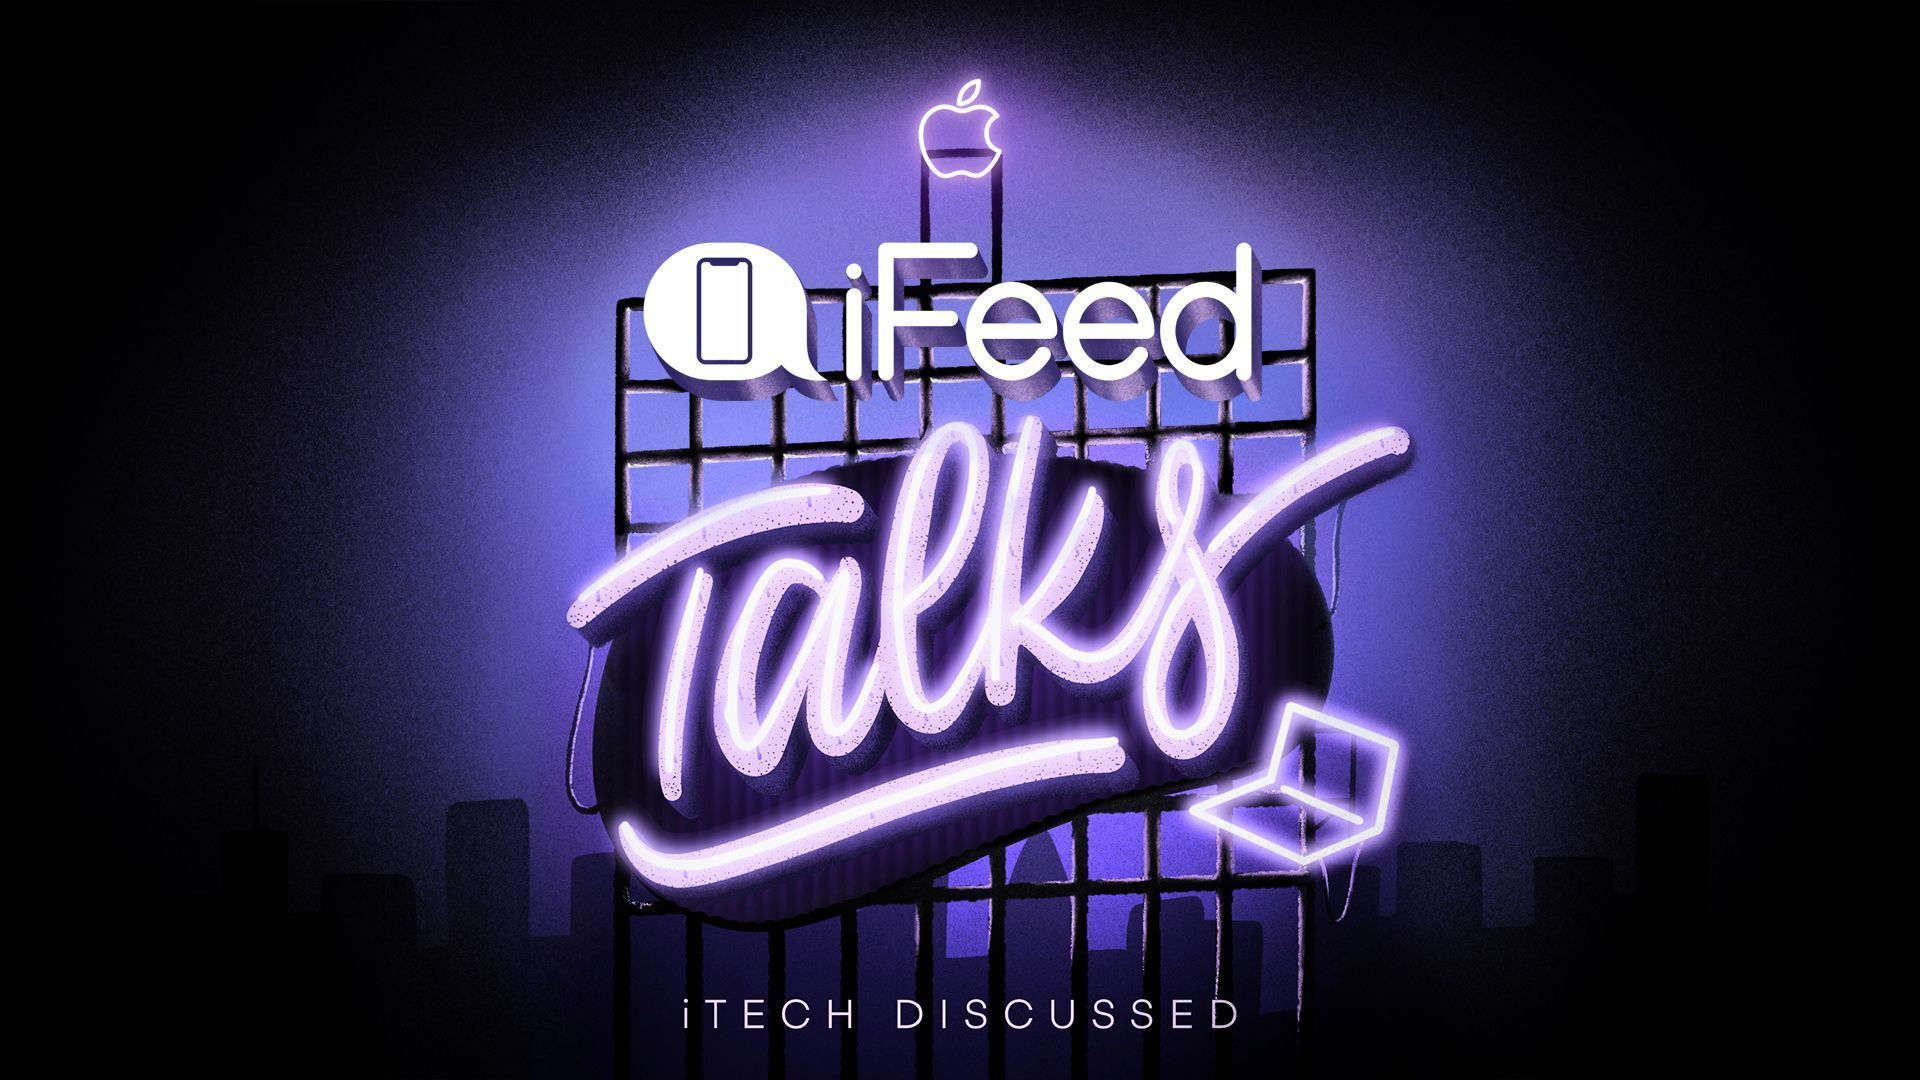 iFeed Talks - Rescaldo do evento "Peek Performance" com Filipe Espósito post image